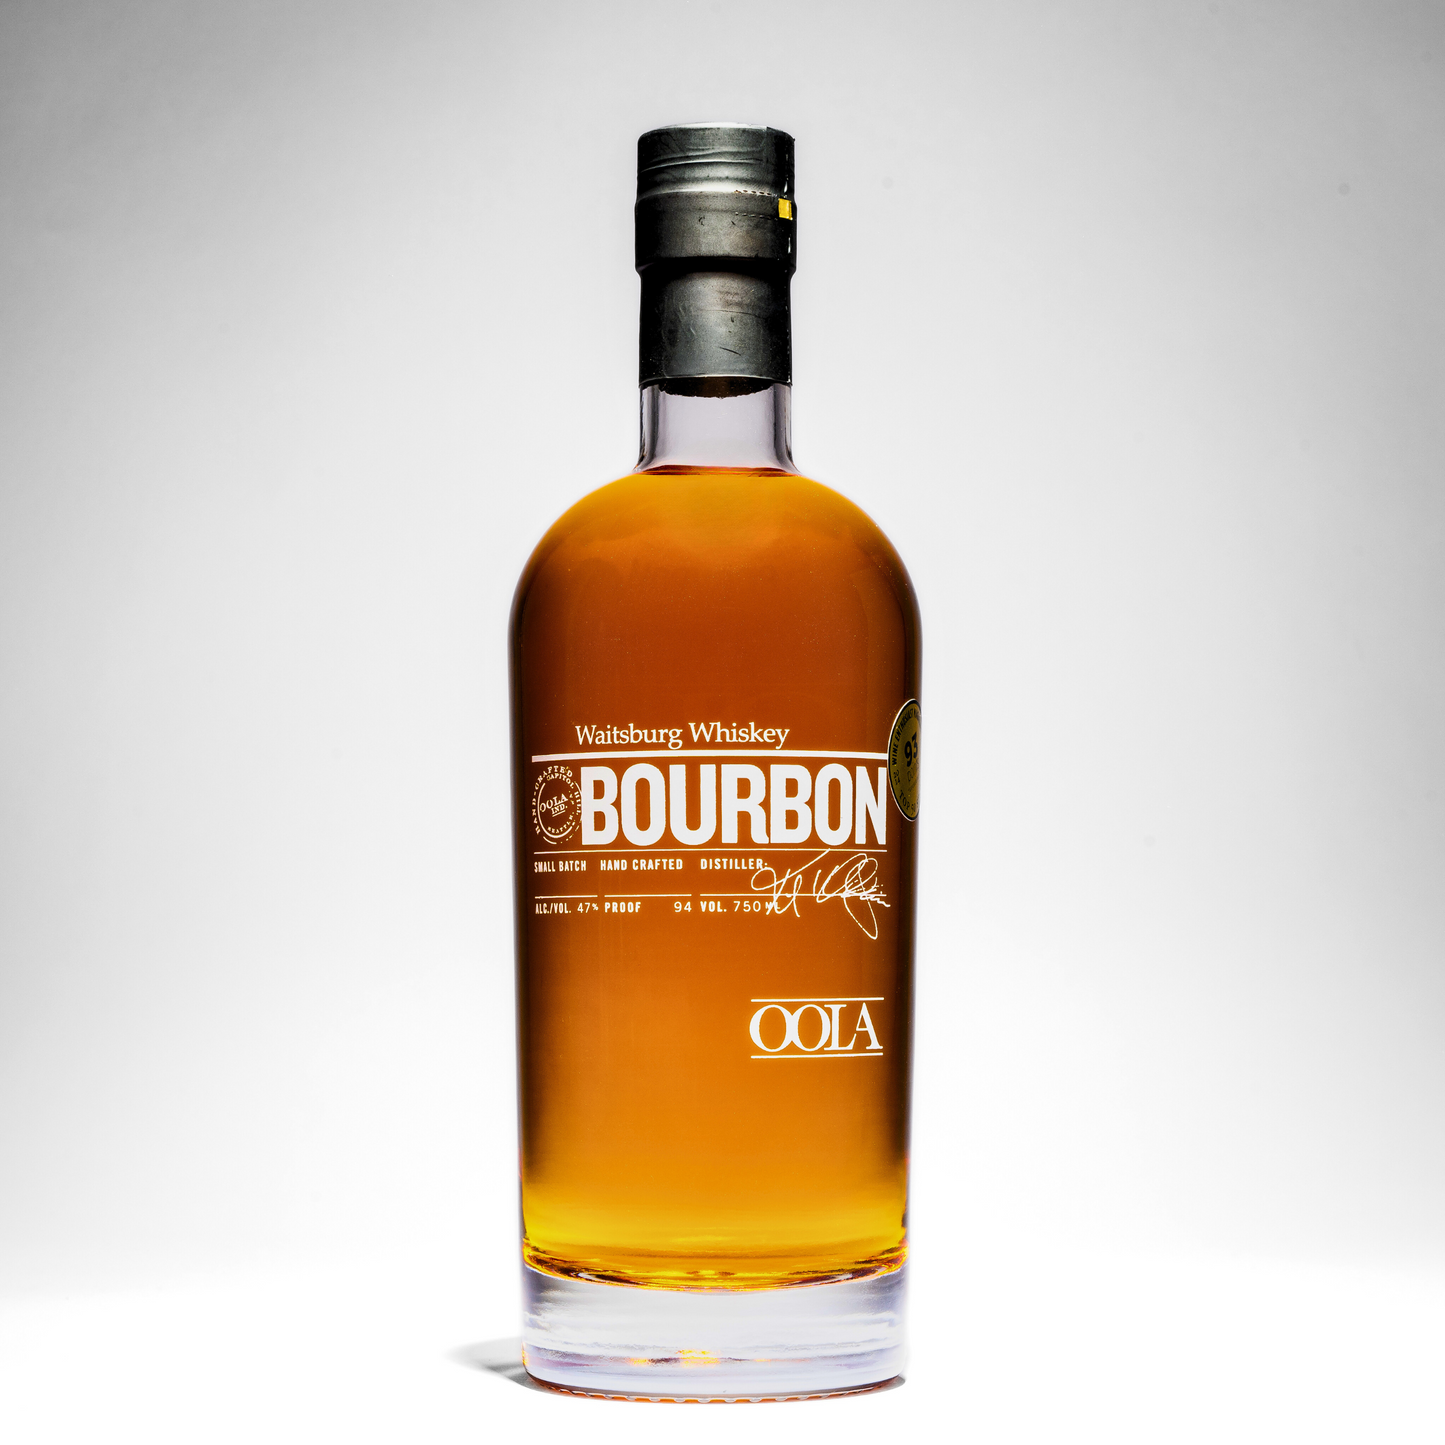 OOLA Waitsburg Bourbon